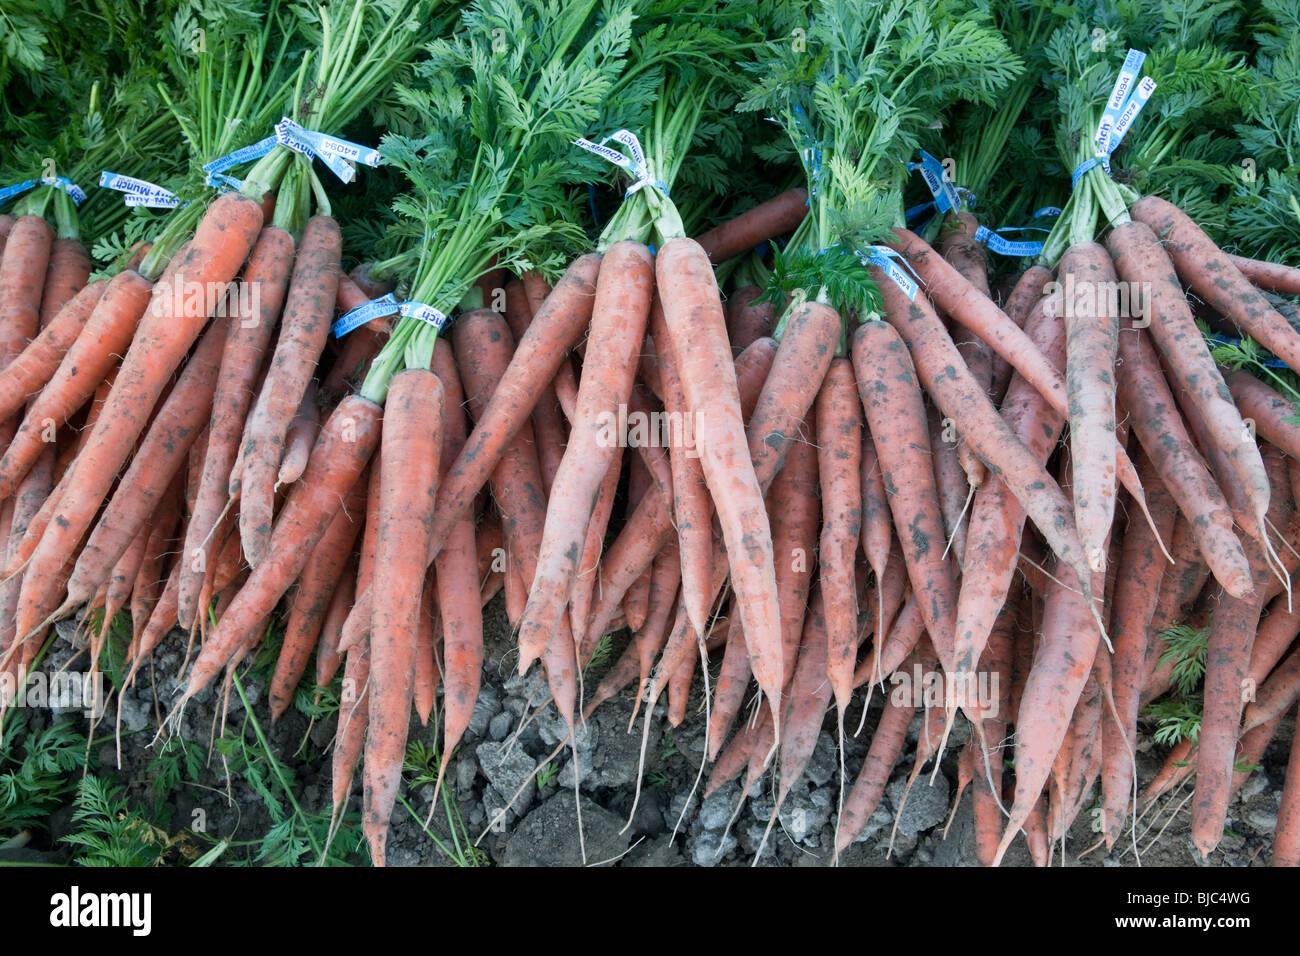 Carote 'Daucus carota' trefolato, raccolto. Foto Stock